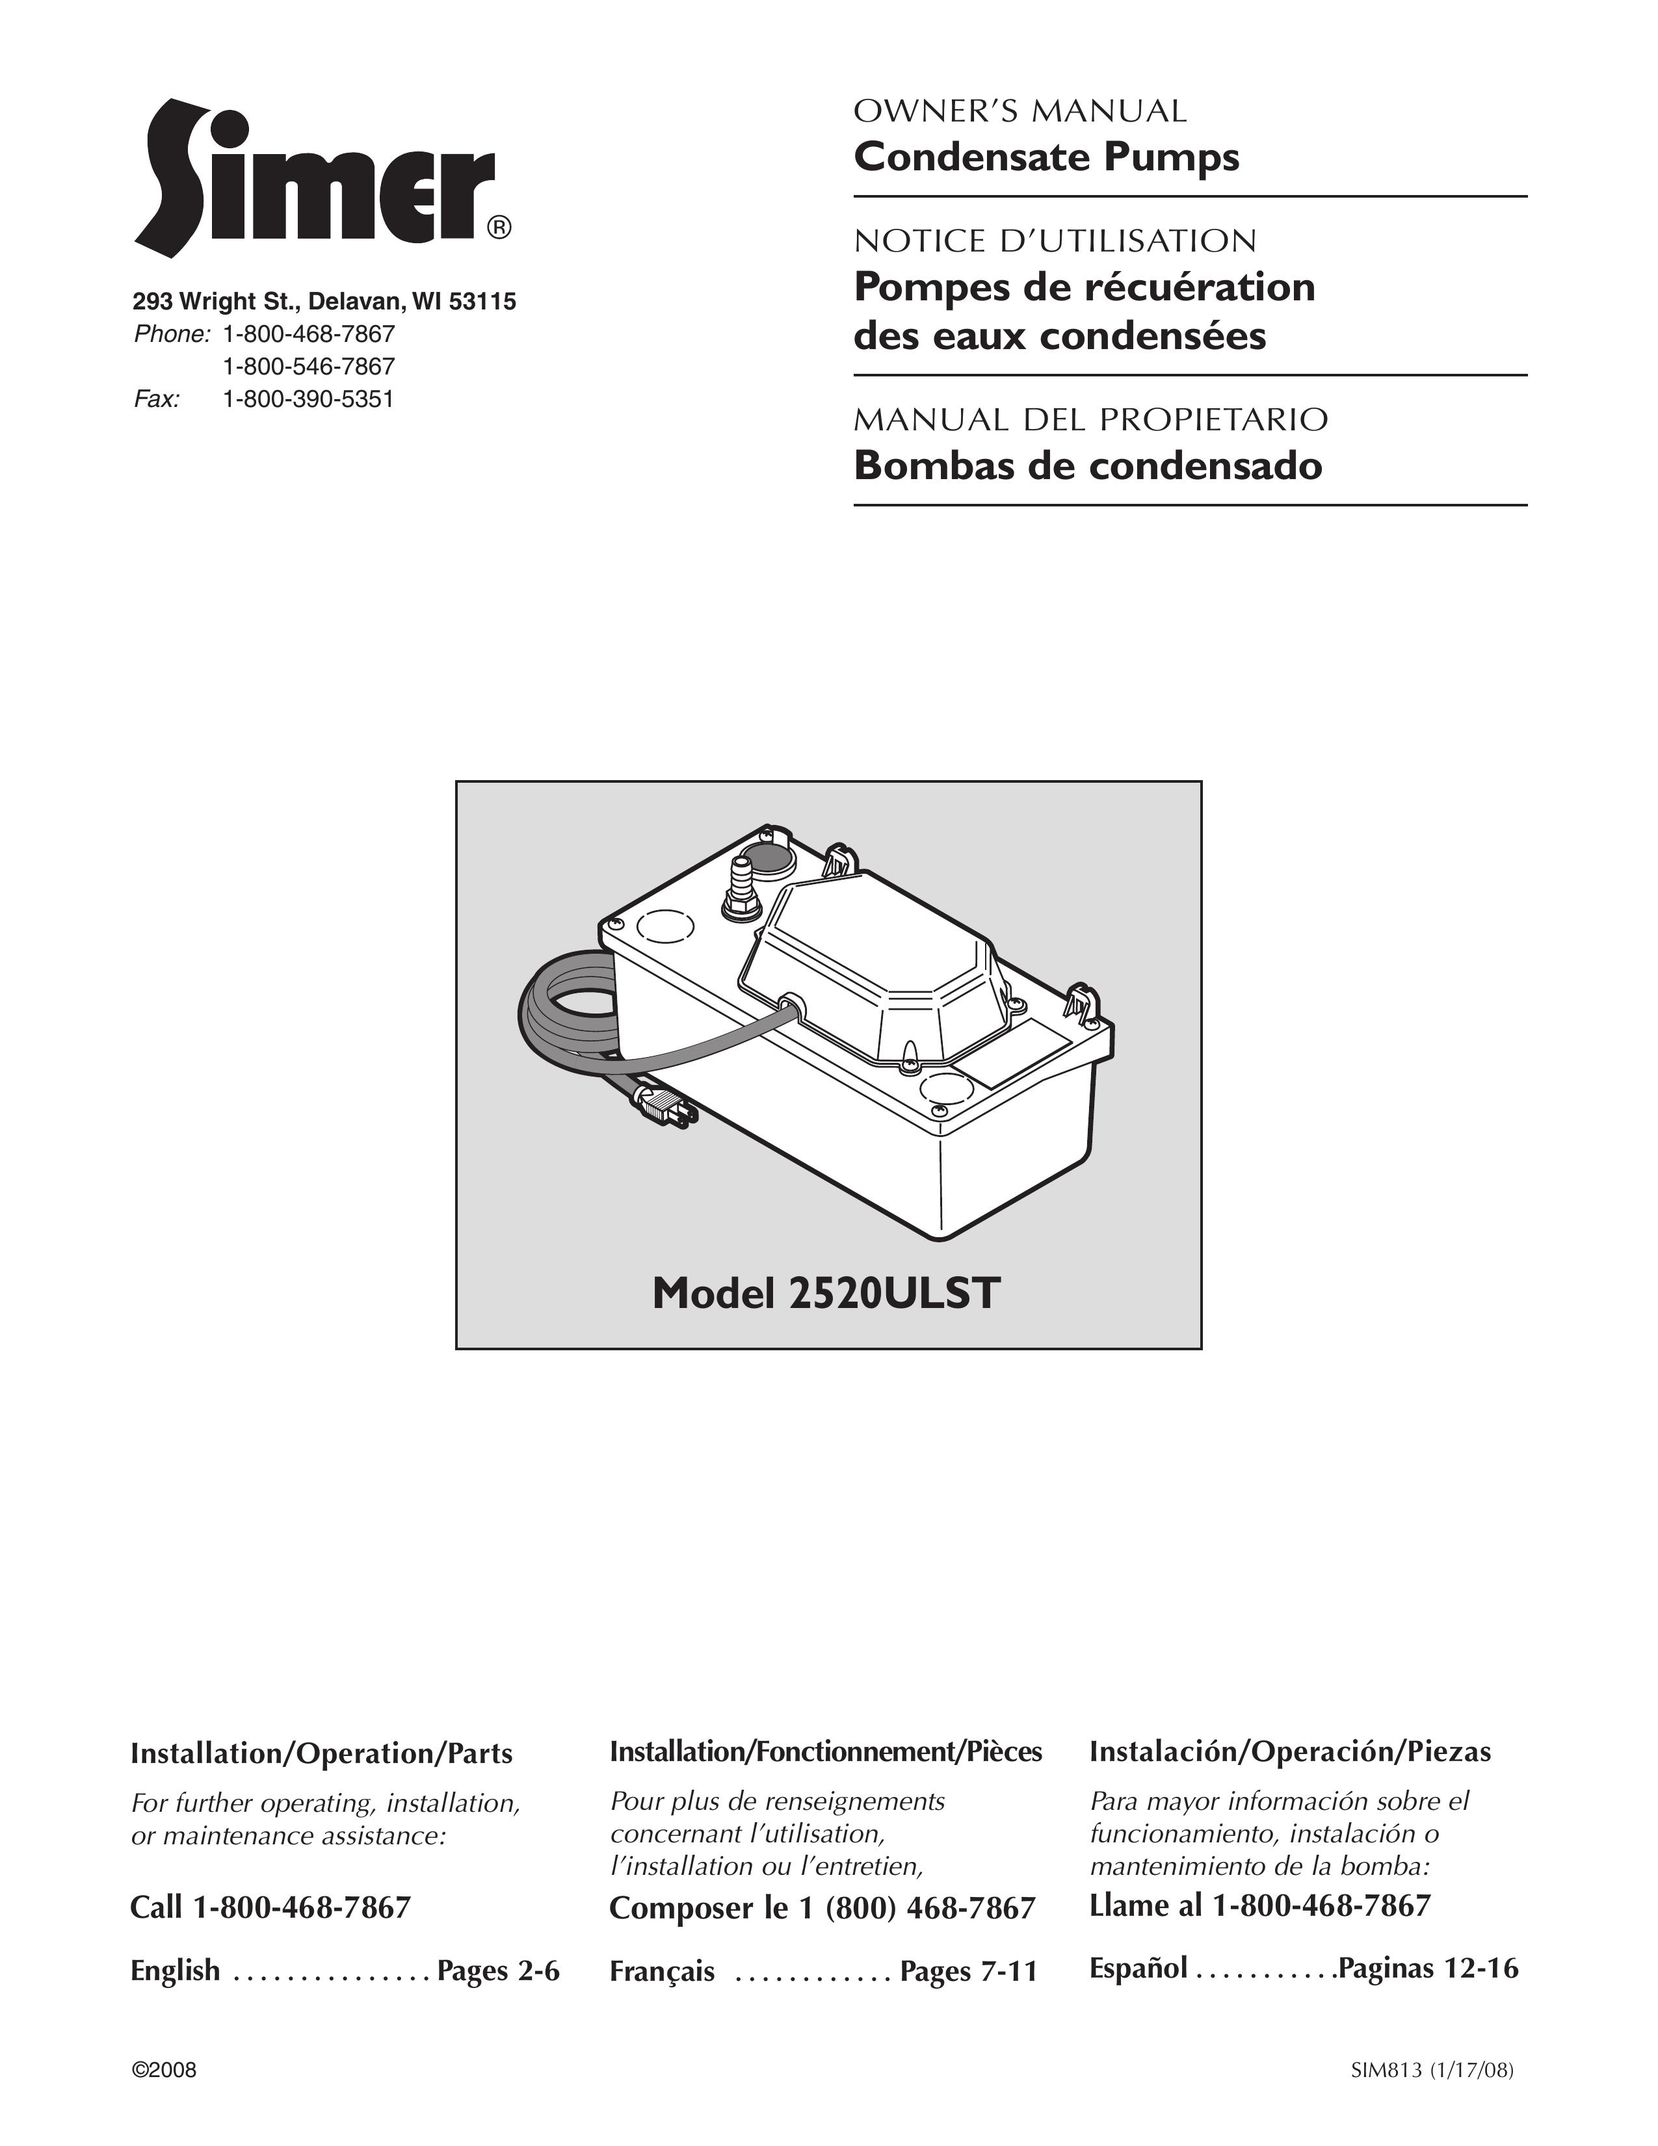 Simer Pumps 2520ULST Plumbing Product User Manual